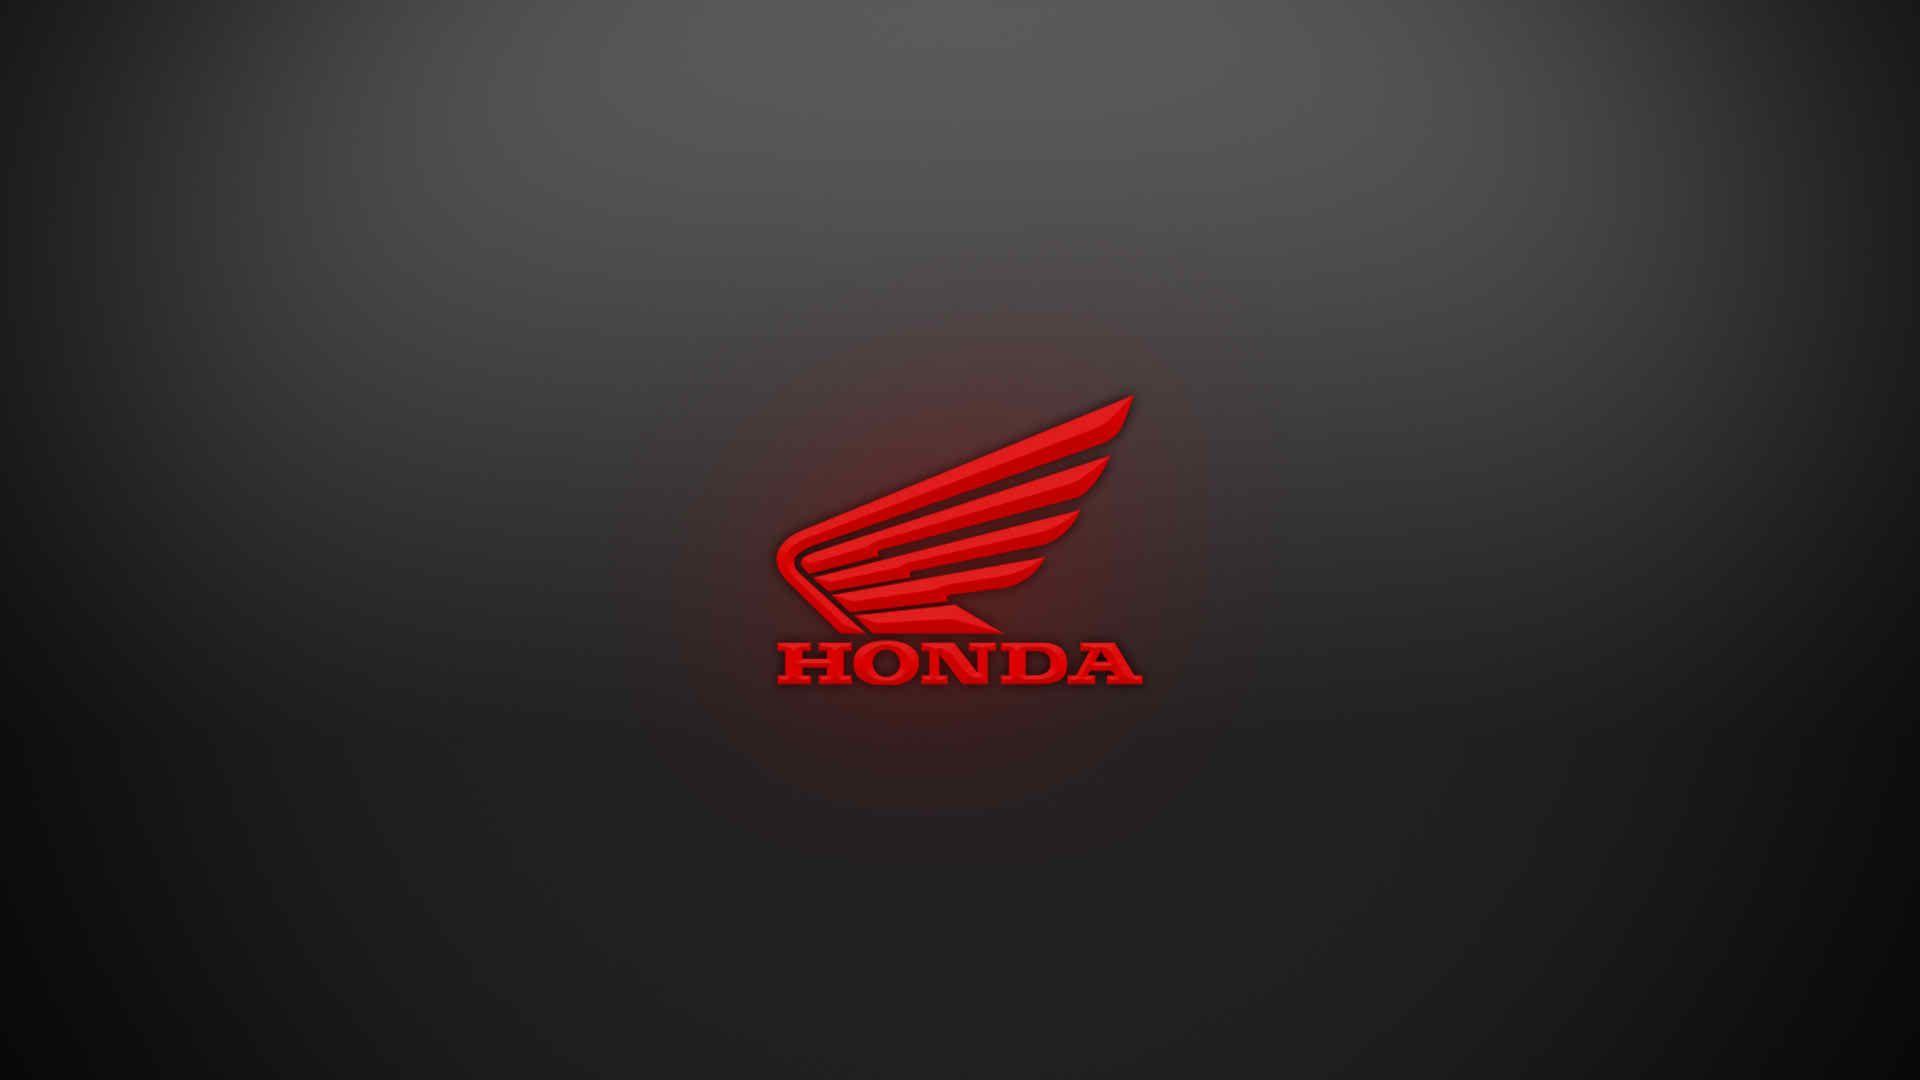 Awesome Honda Wallpaper, Honda Wallpaper HD